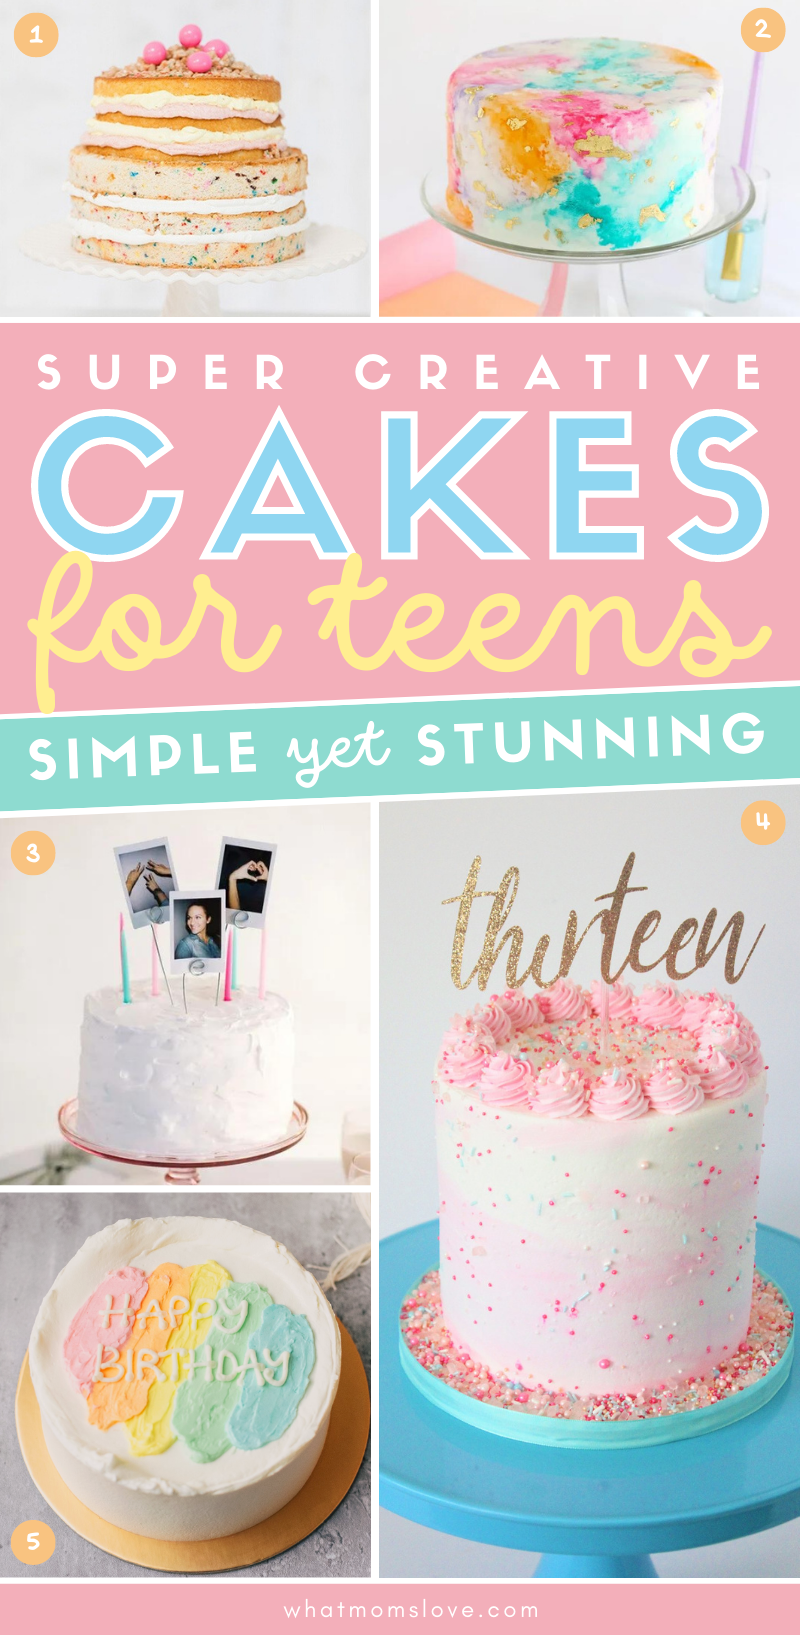 Whipped cream cake | Whipped cream cakes, Cream cake, Cake decorating  frosting